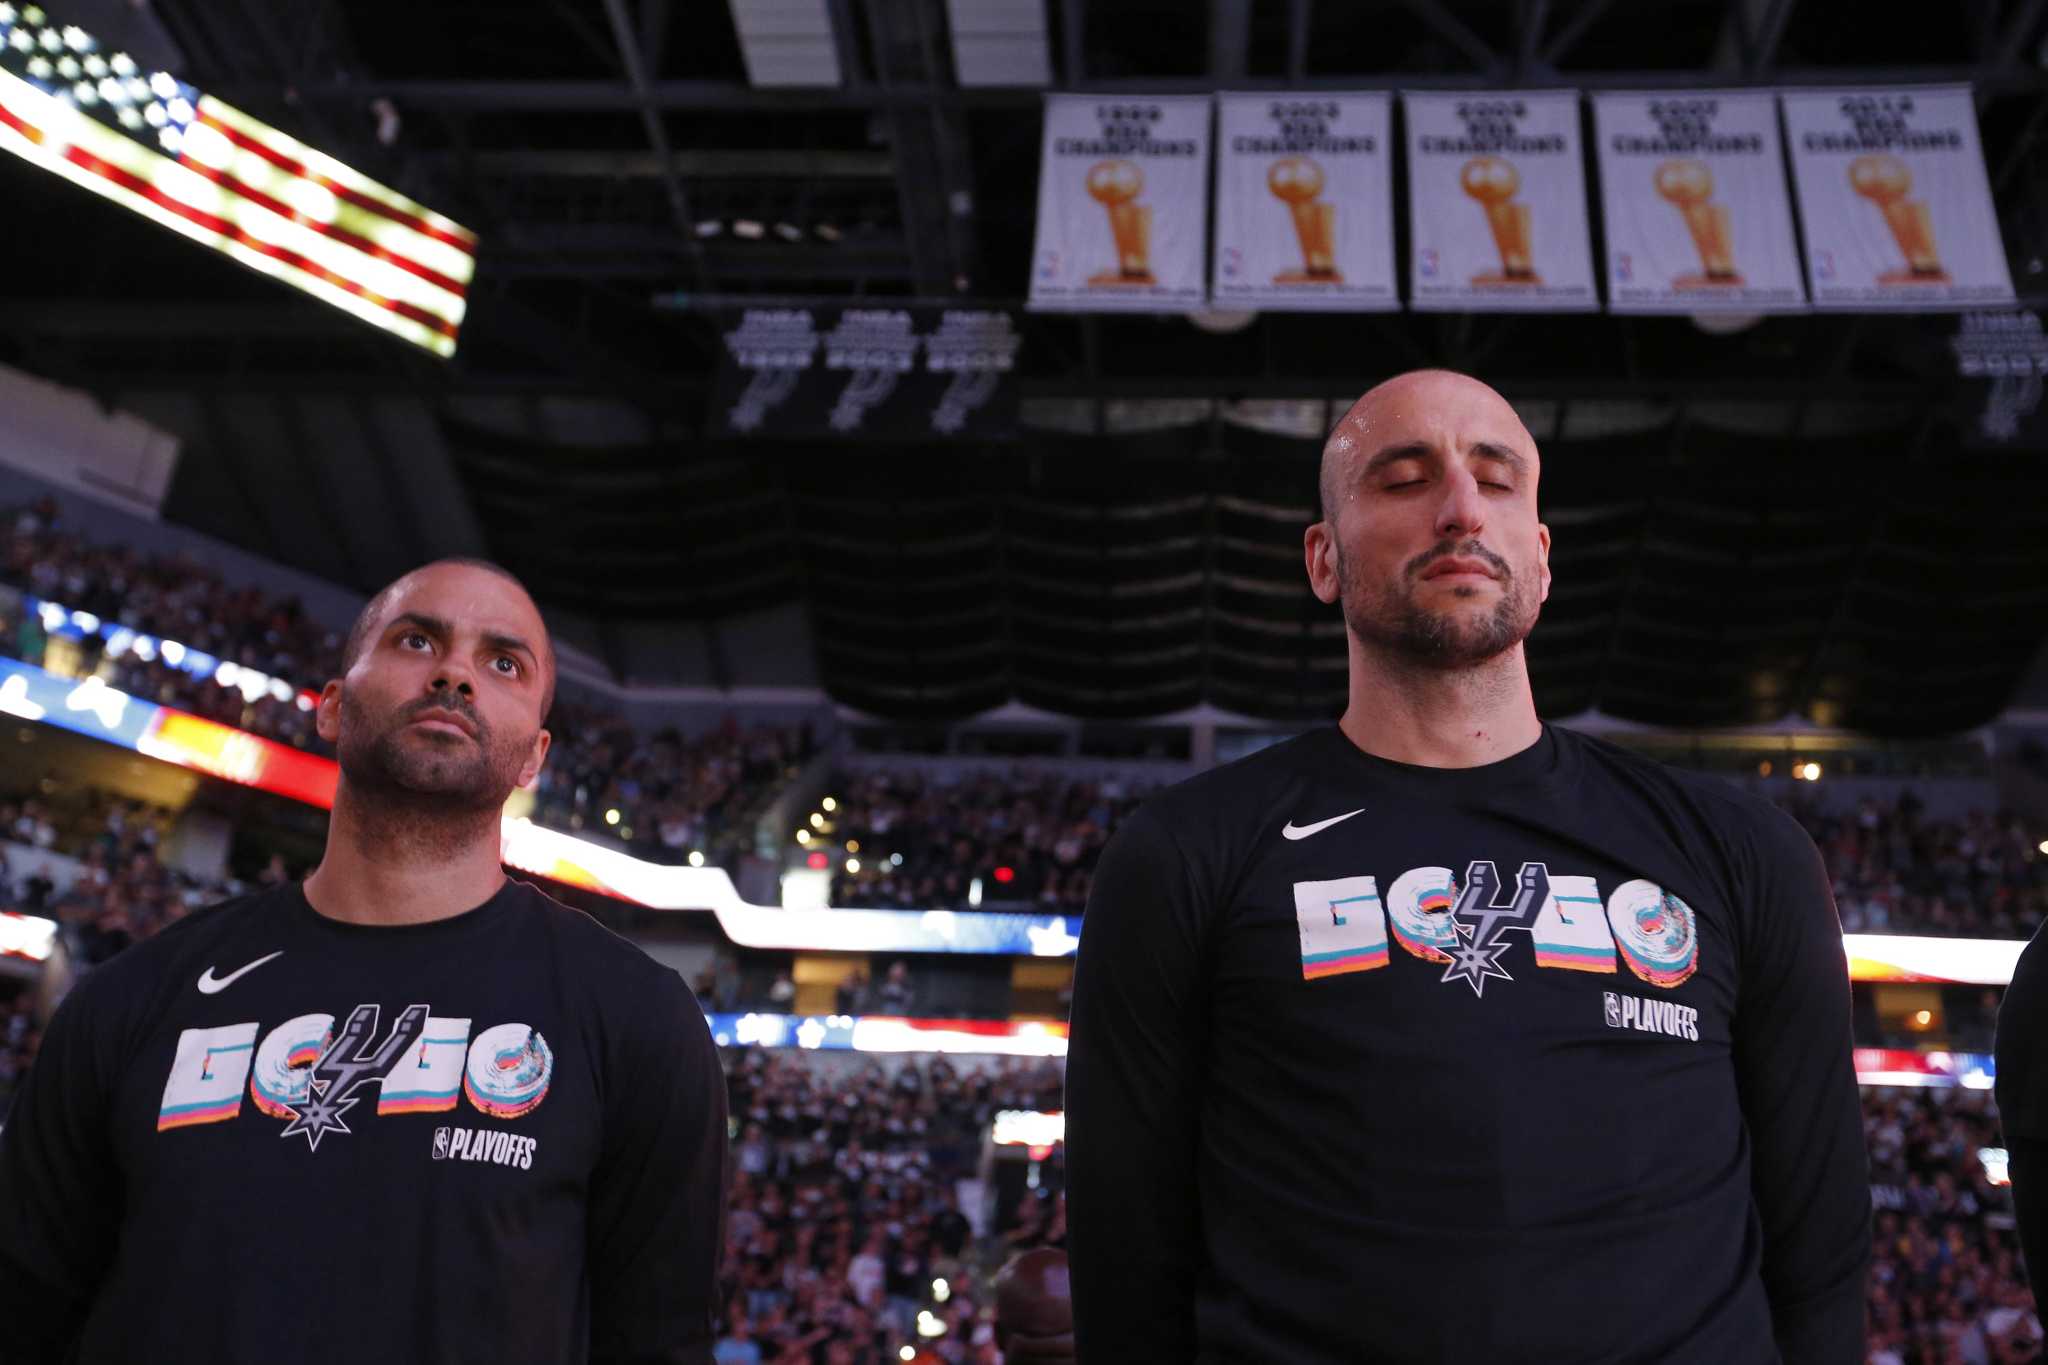 San Antonio Spurs retire Manu Ginobili's jersey during emotional ceremony, NBA News